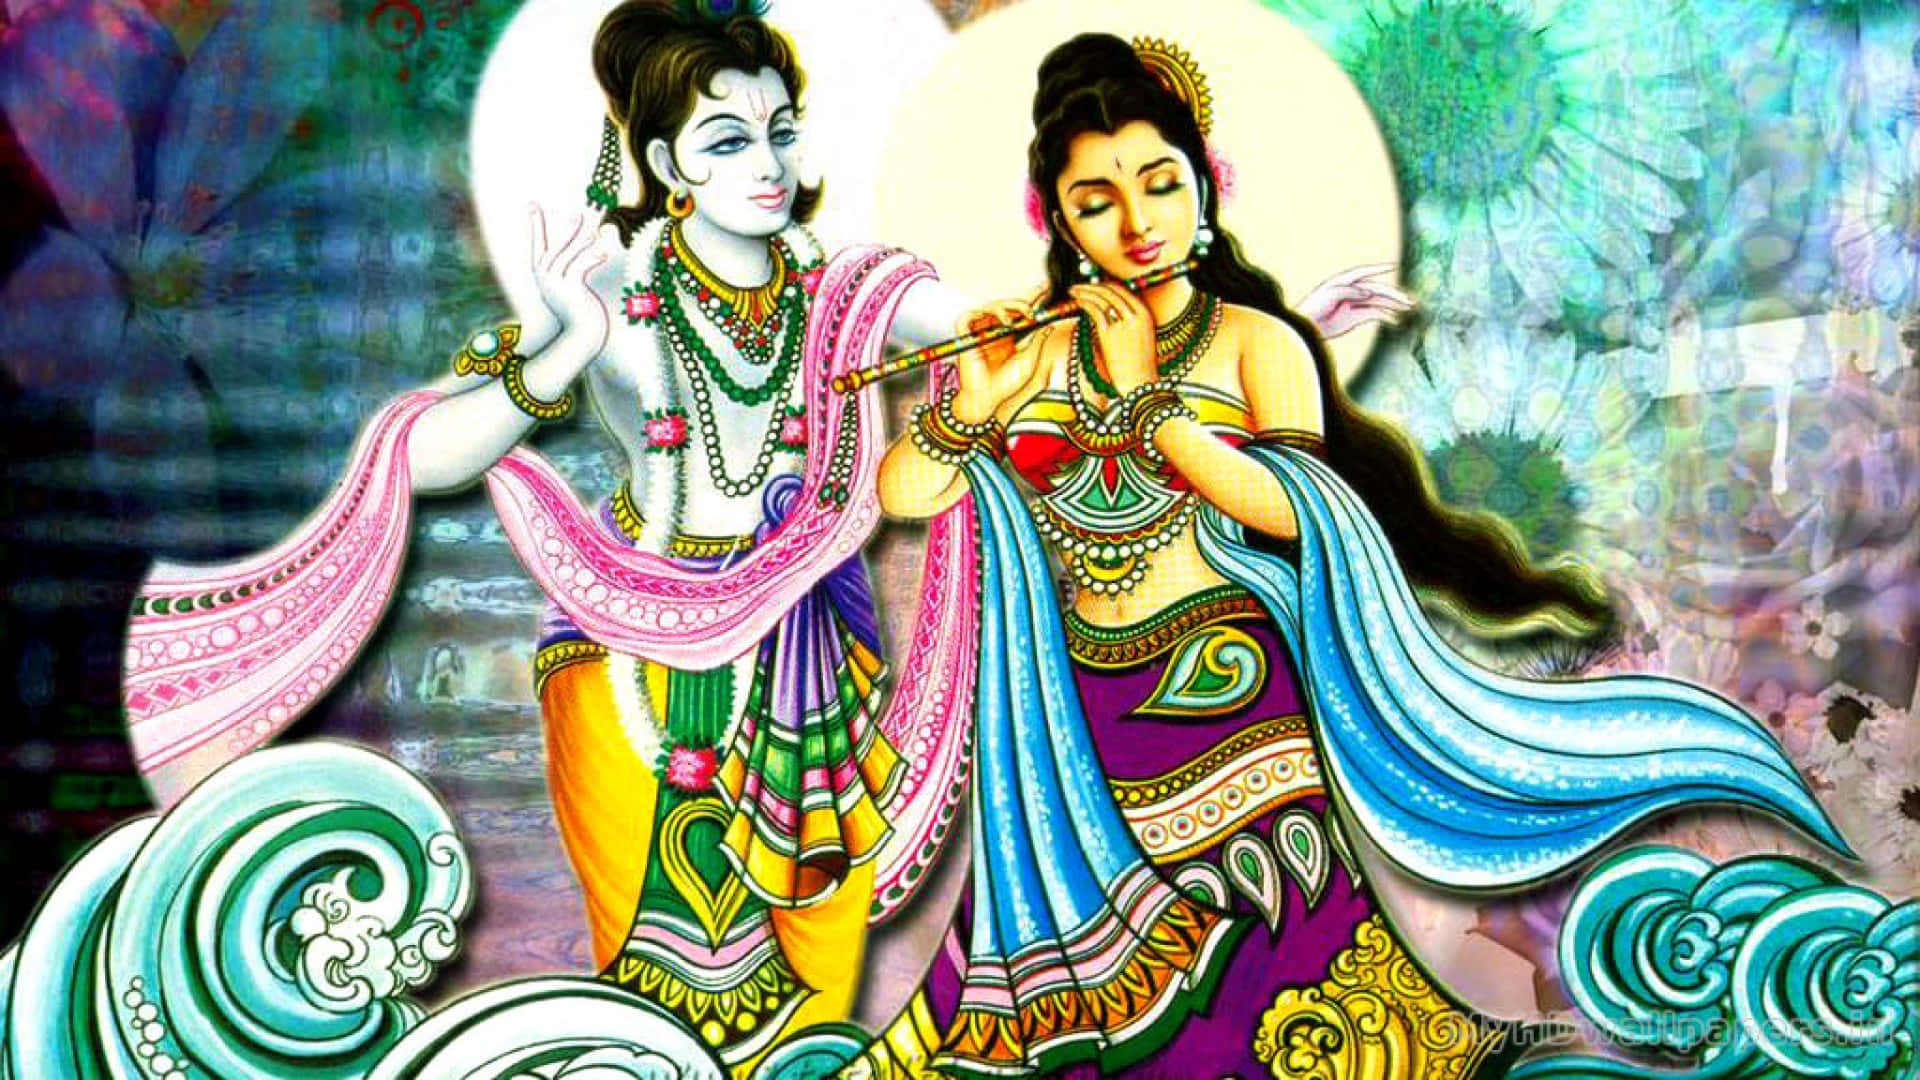 Radha And Krishna Romantic Wallpapers - Wallpaper Cave